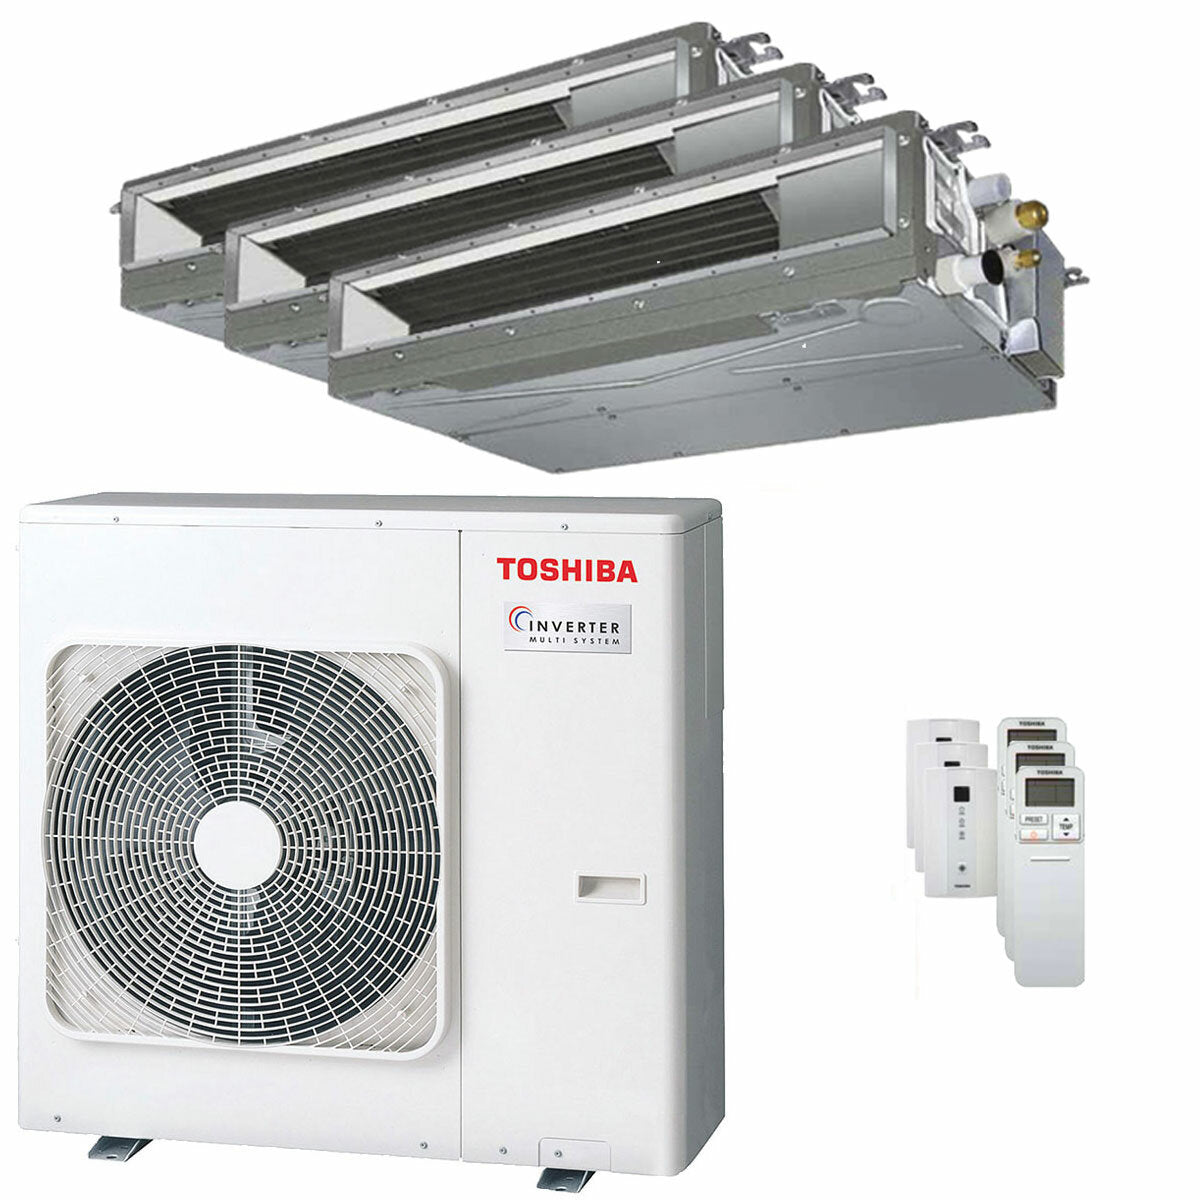 Toshiba ducted air conditioner U2 trial split 7000+9000+22000 BTU inverter A+++ external unit 7 kW